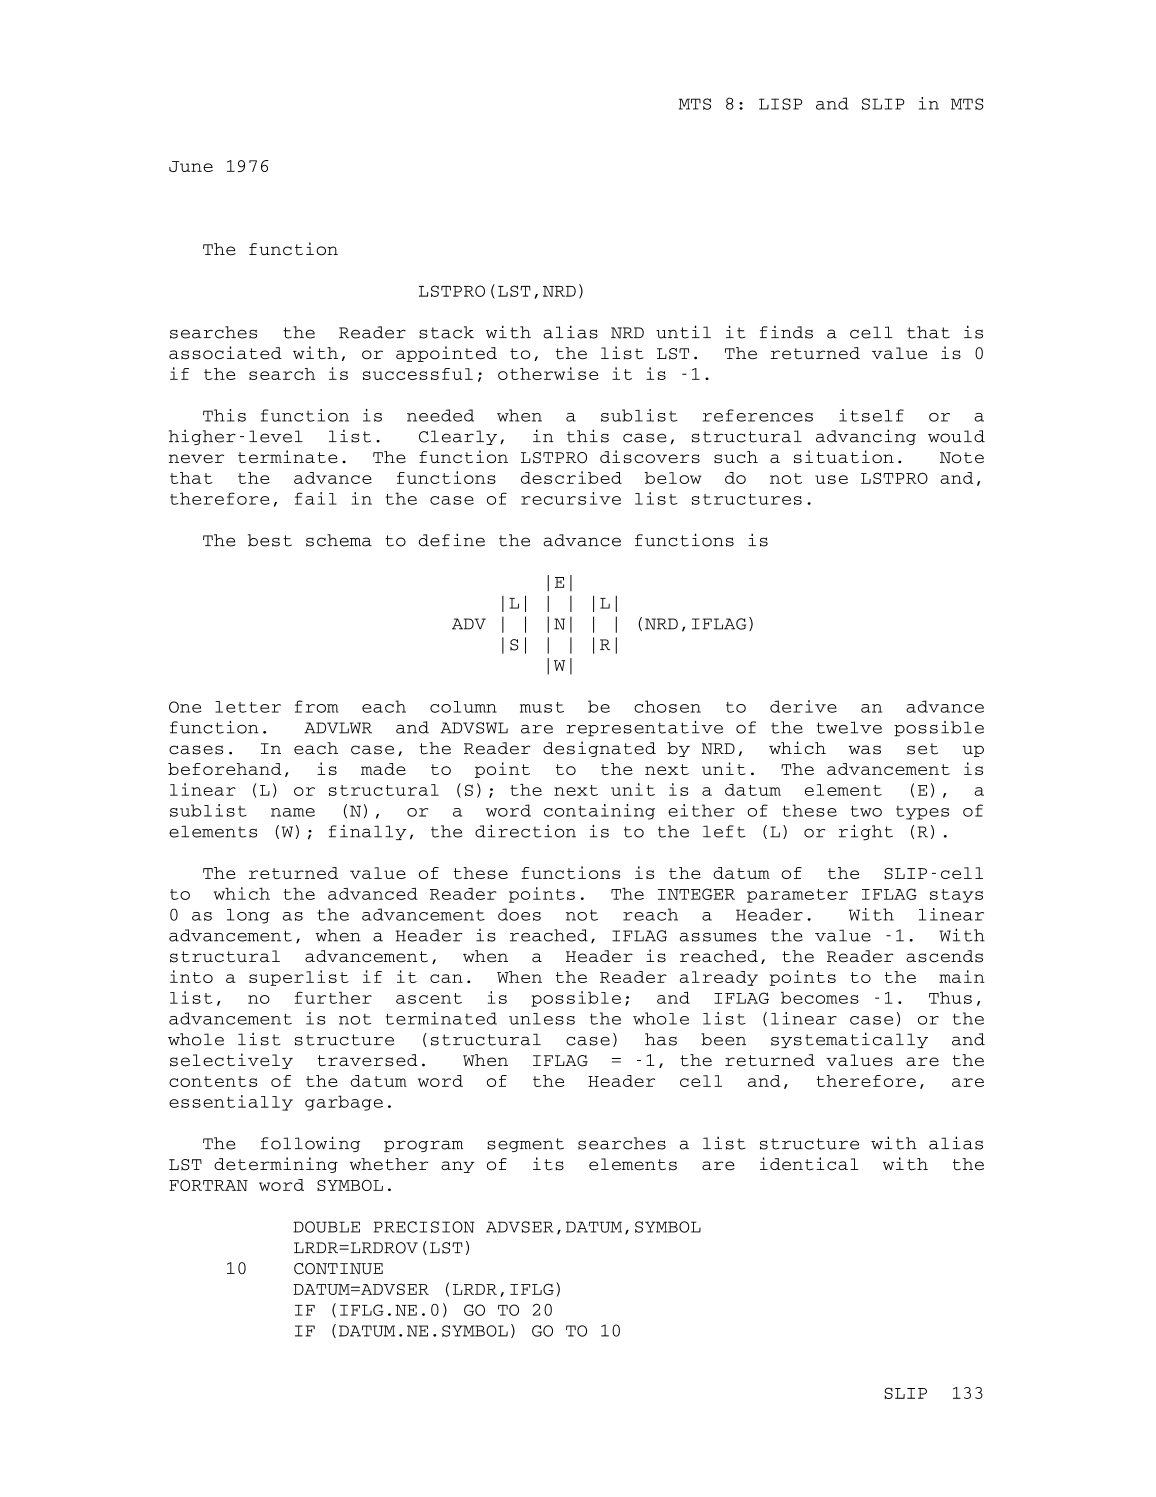 MTS Volume 8 - LISP and SLIP page 132